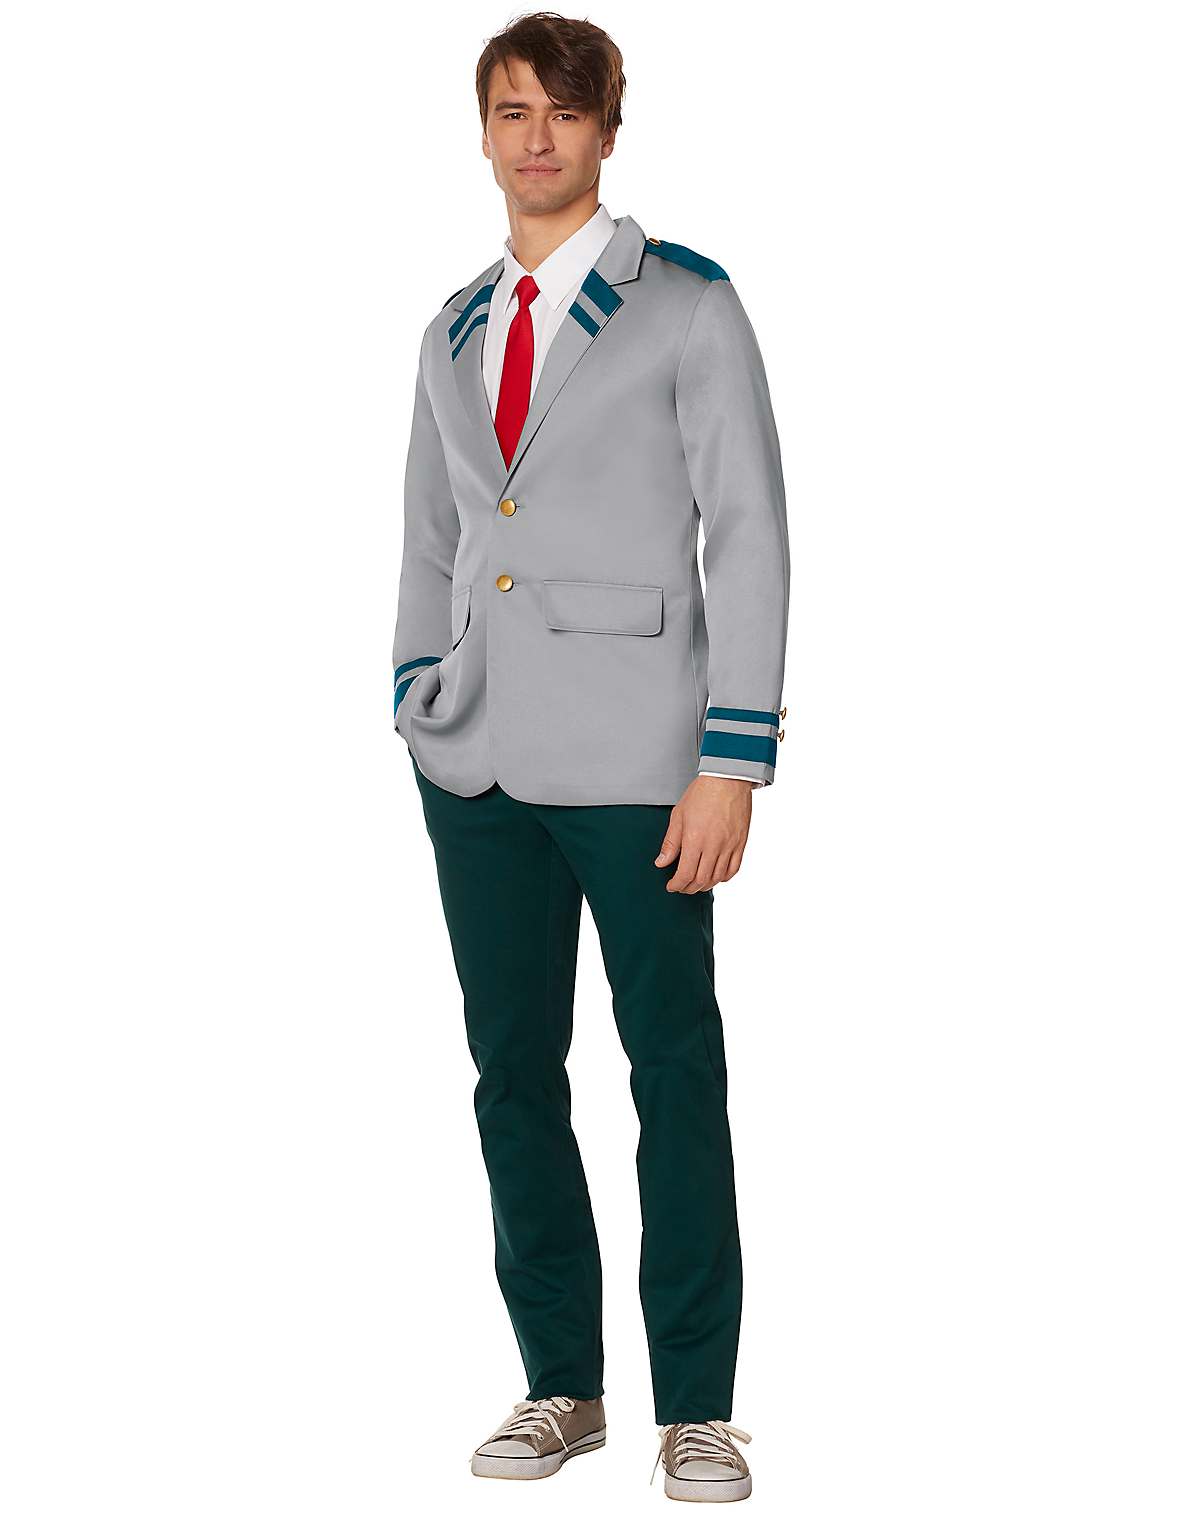 U.A. School Uniform Jacket - My Hero Academia